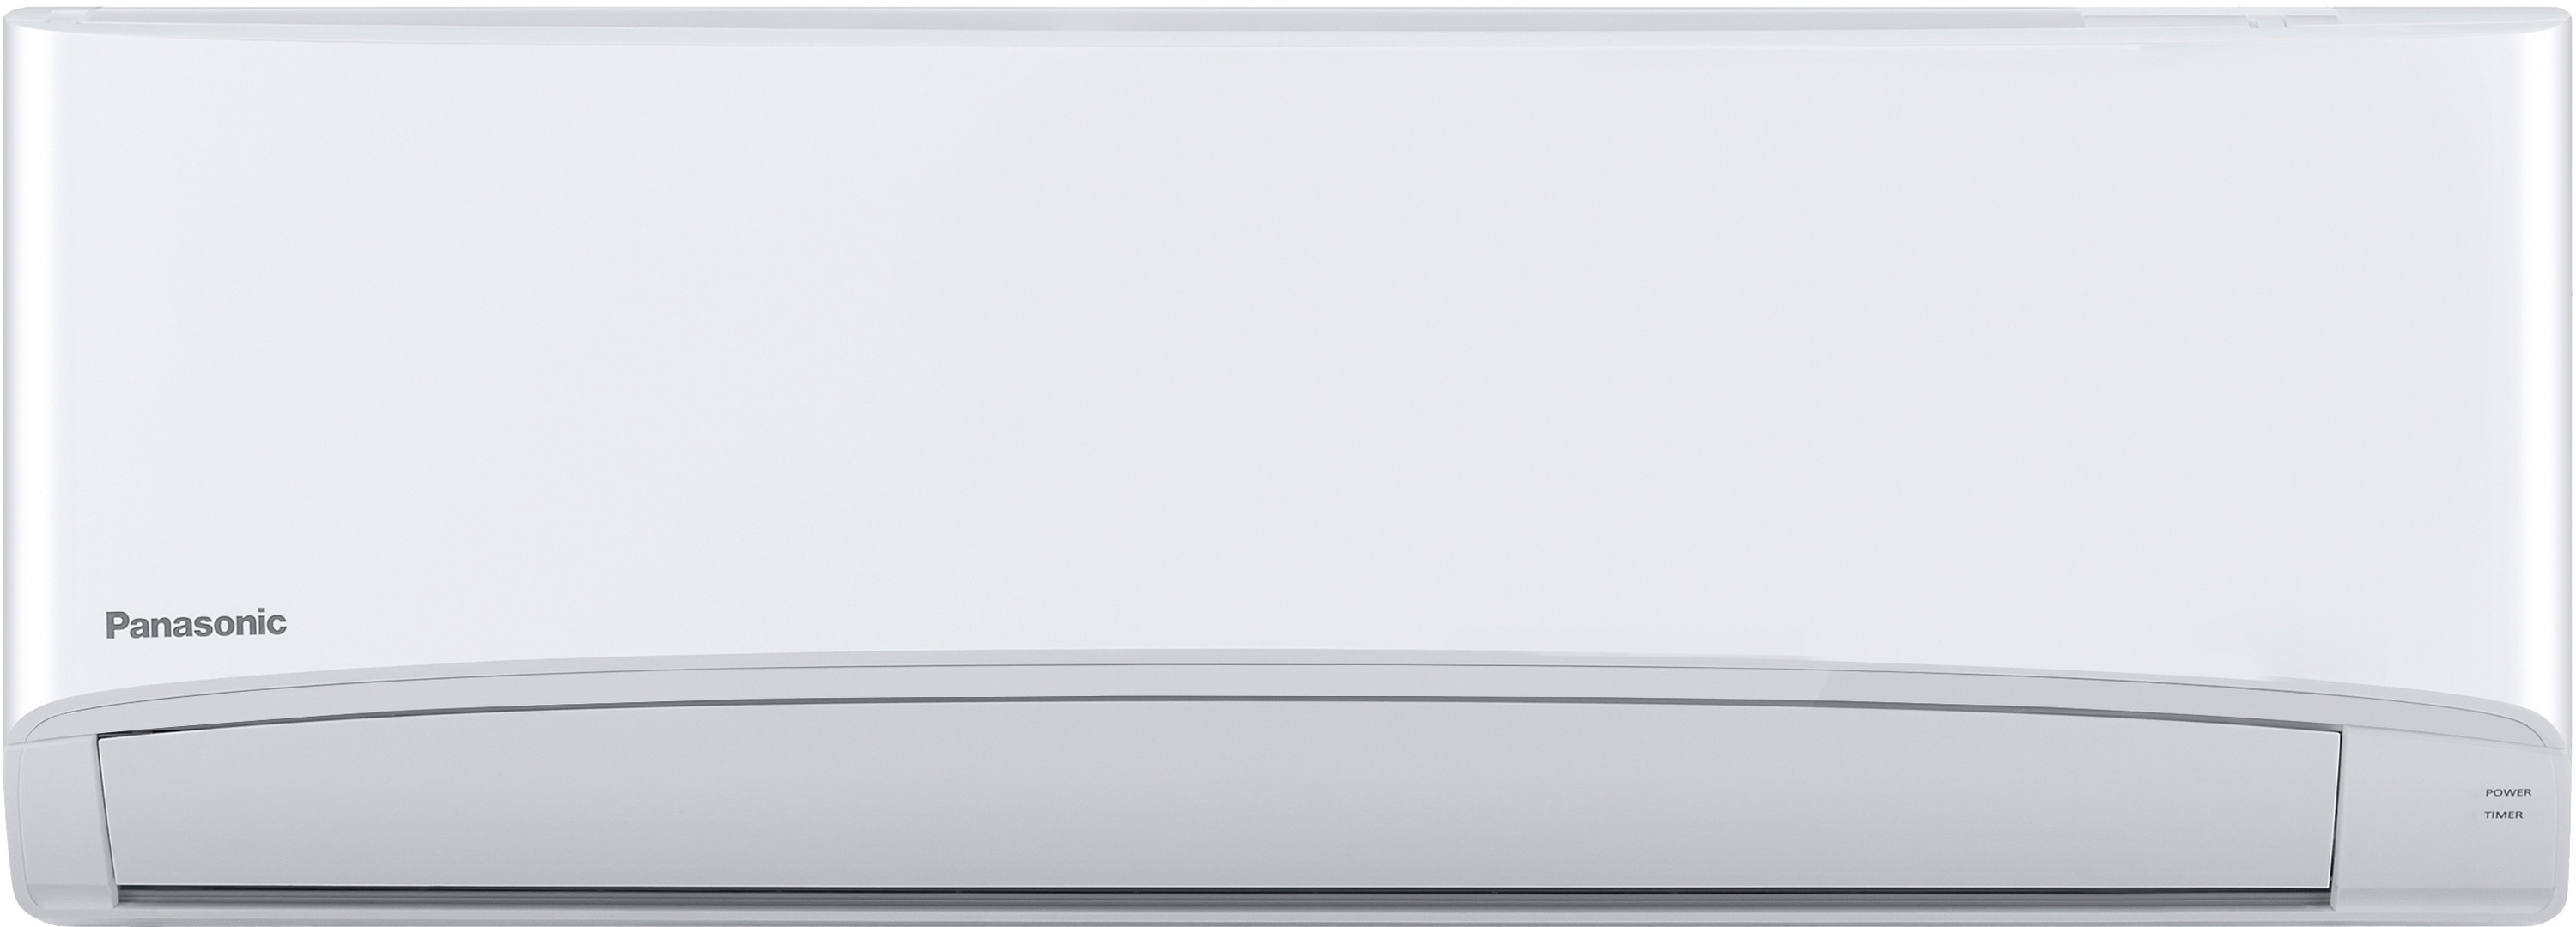 Кондиционер сплит-система Panasonic Compact Inverter CS/CU-TZ35TKEW цена 34499.00 грн - фотография 2